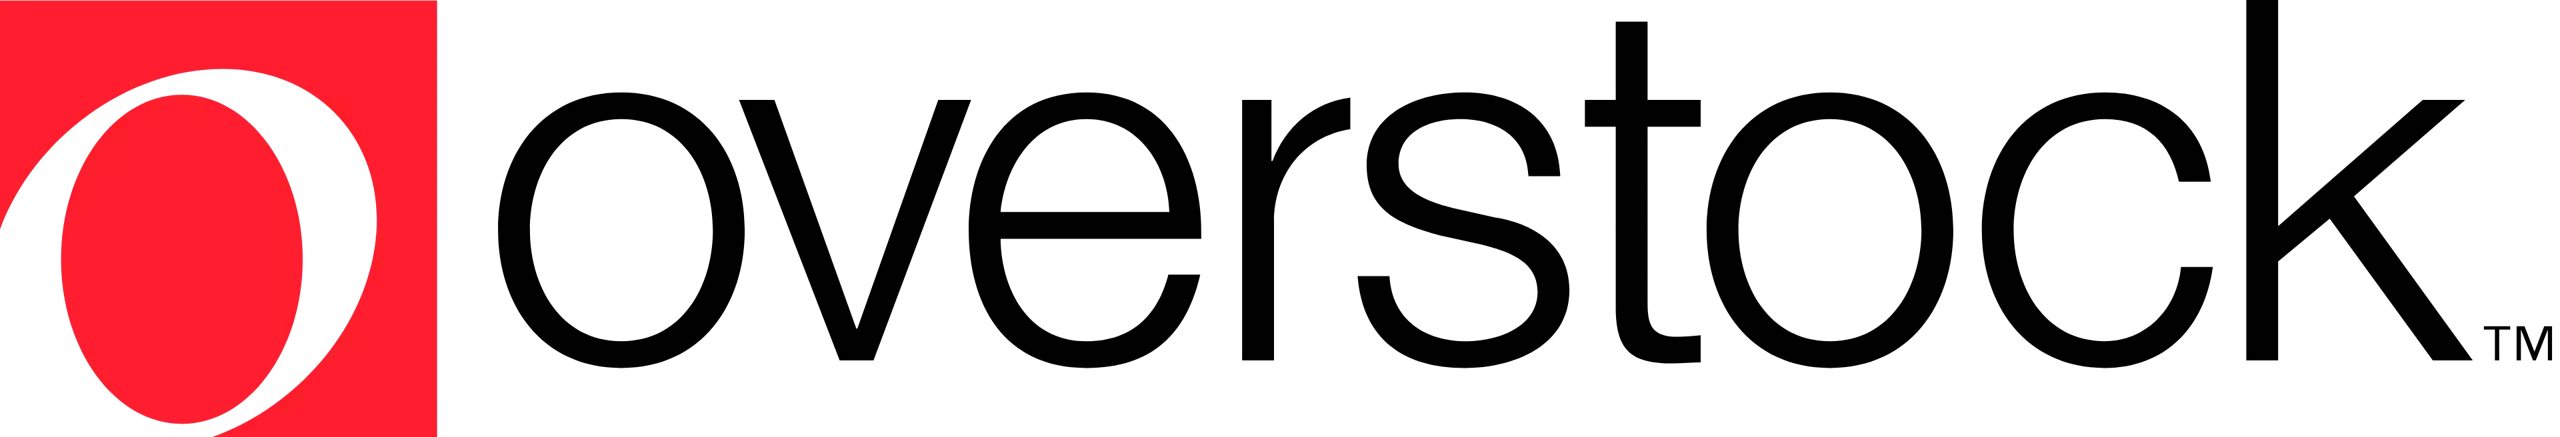 Logo Overstock